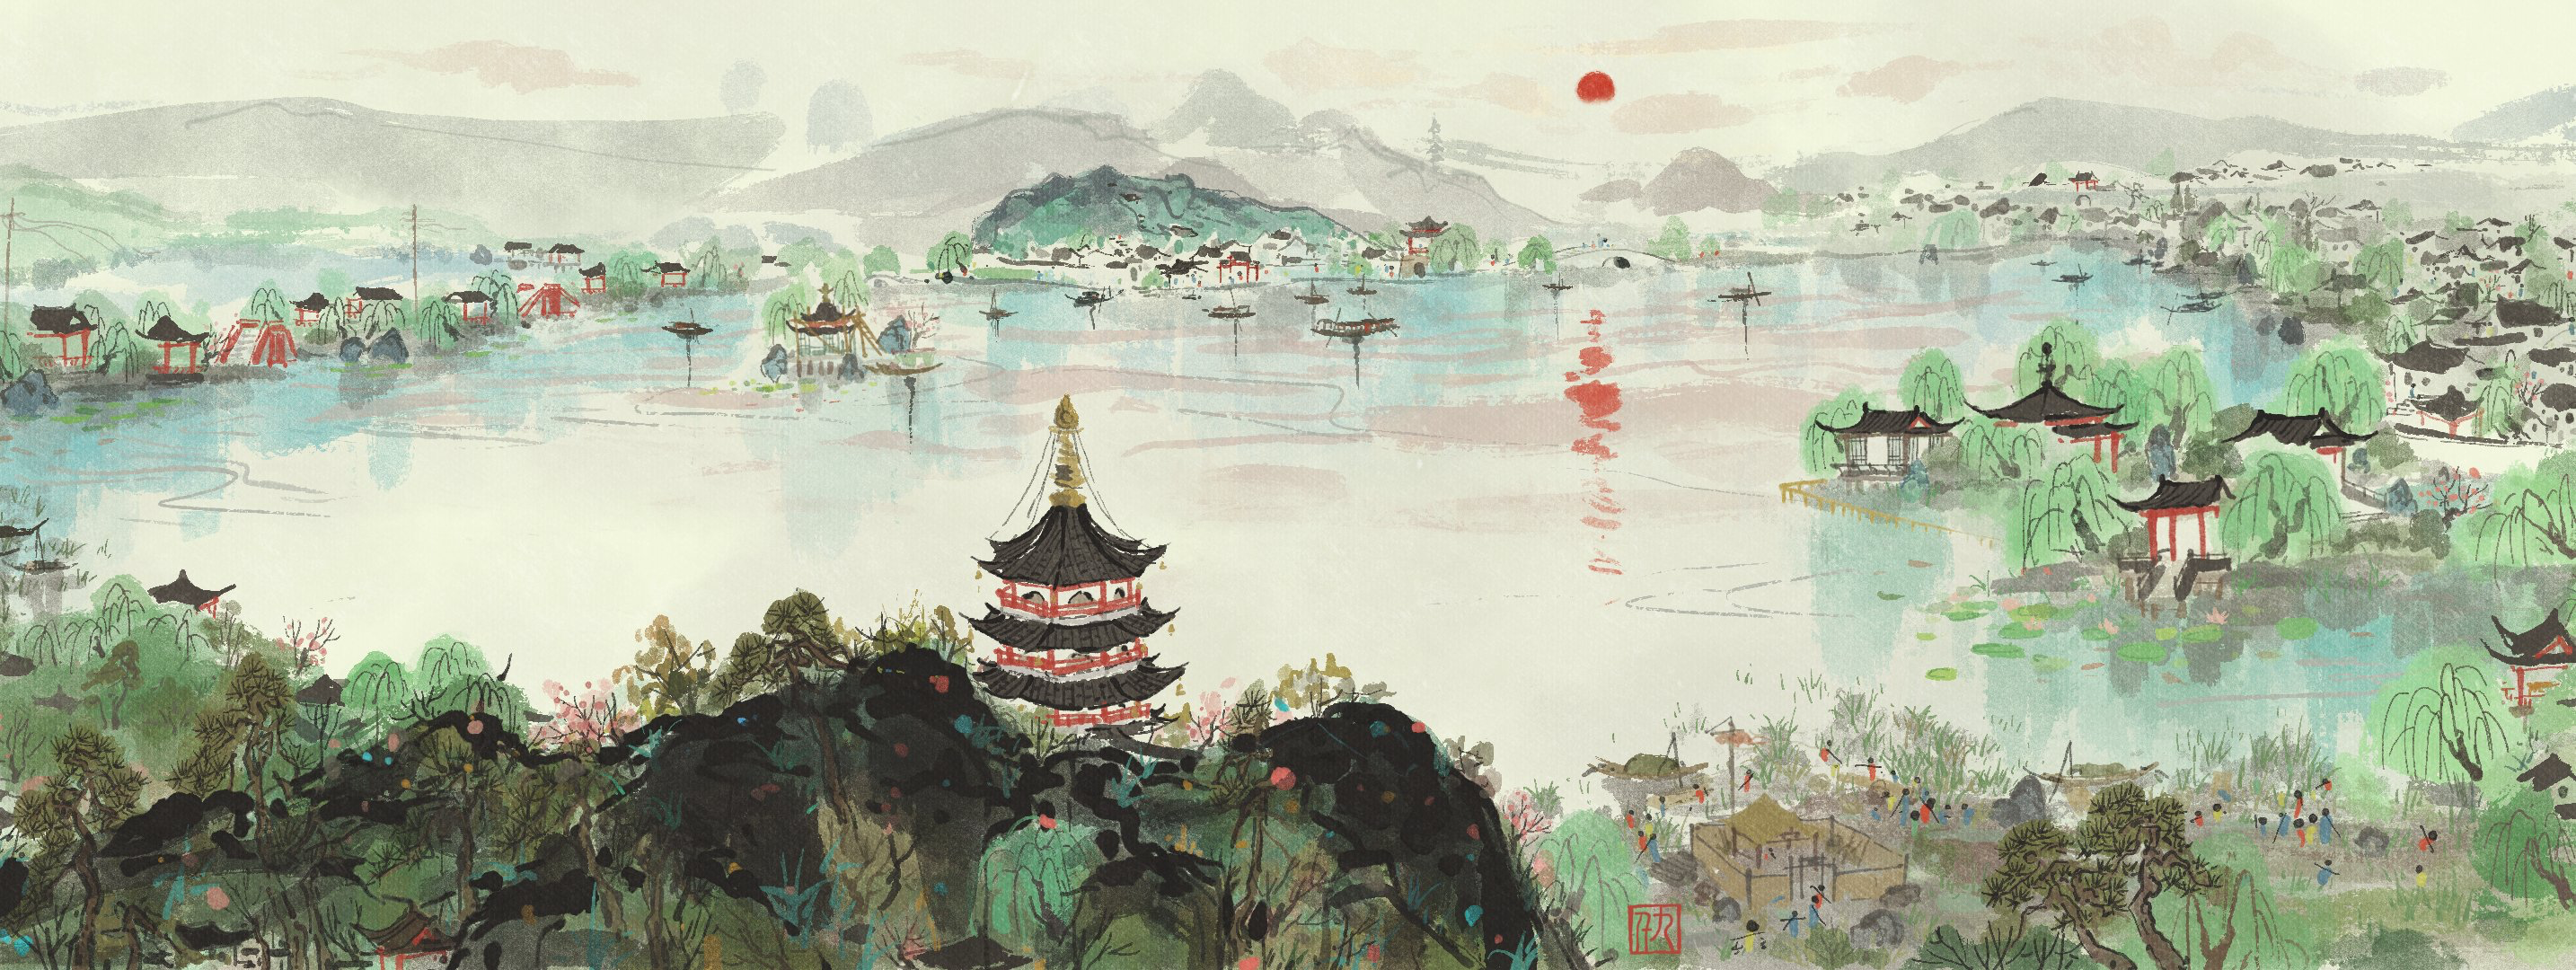 Painting Landscape Japanese Art Neo1900 2868x1080